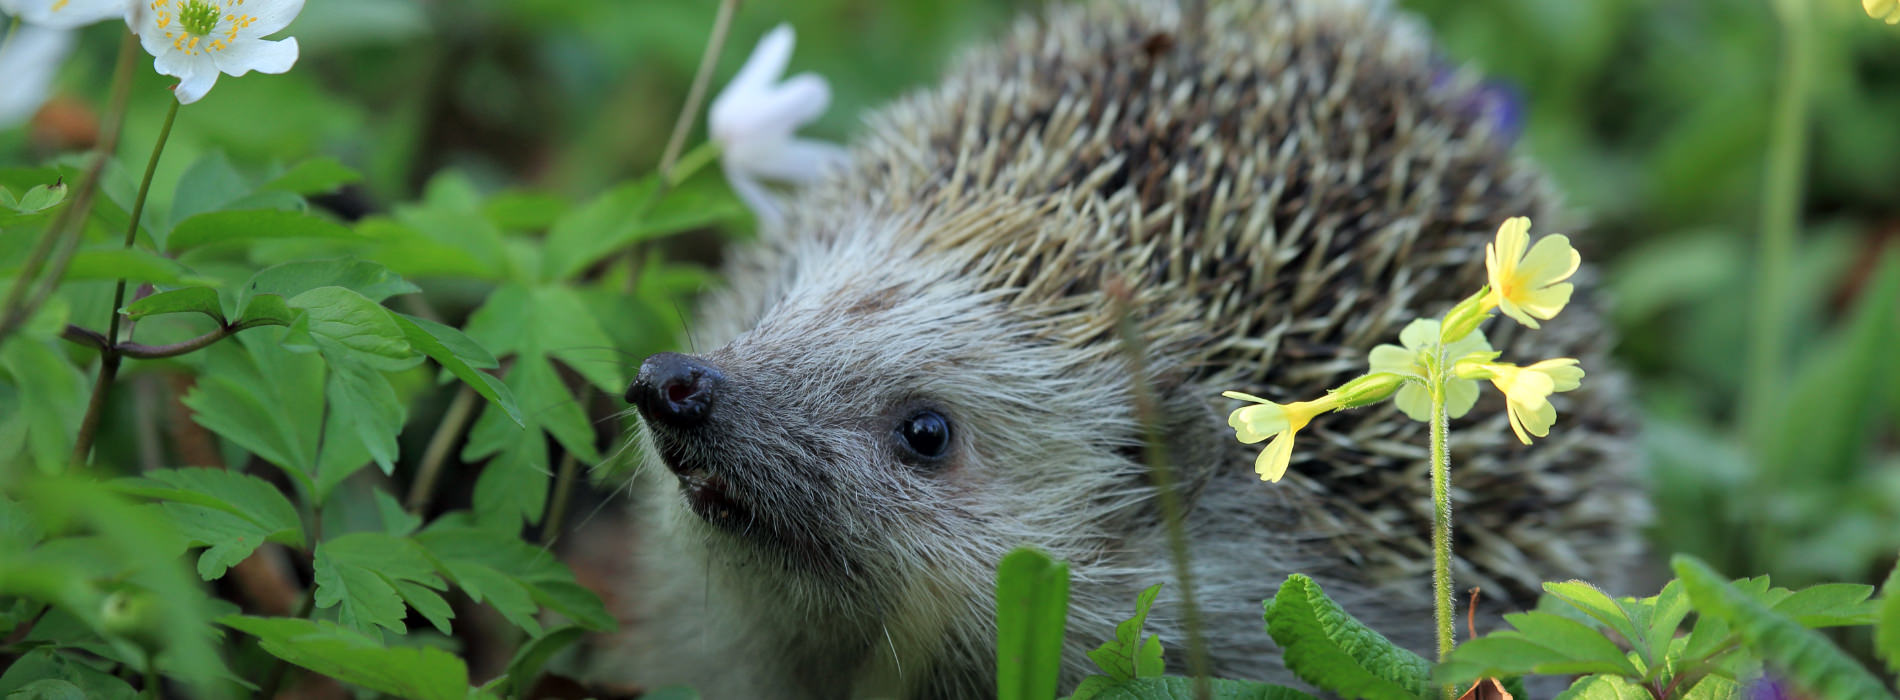 A hedgehog surrounded by vegetation